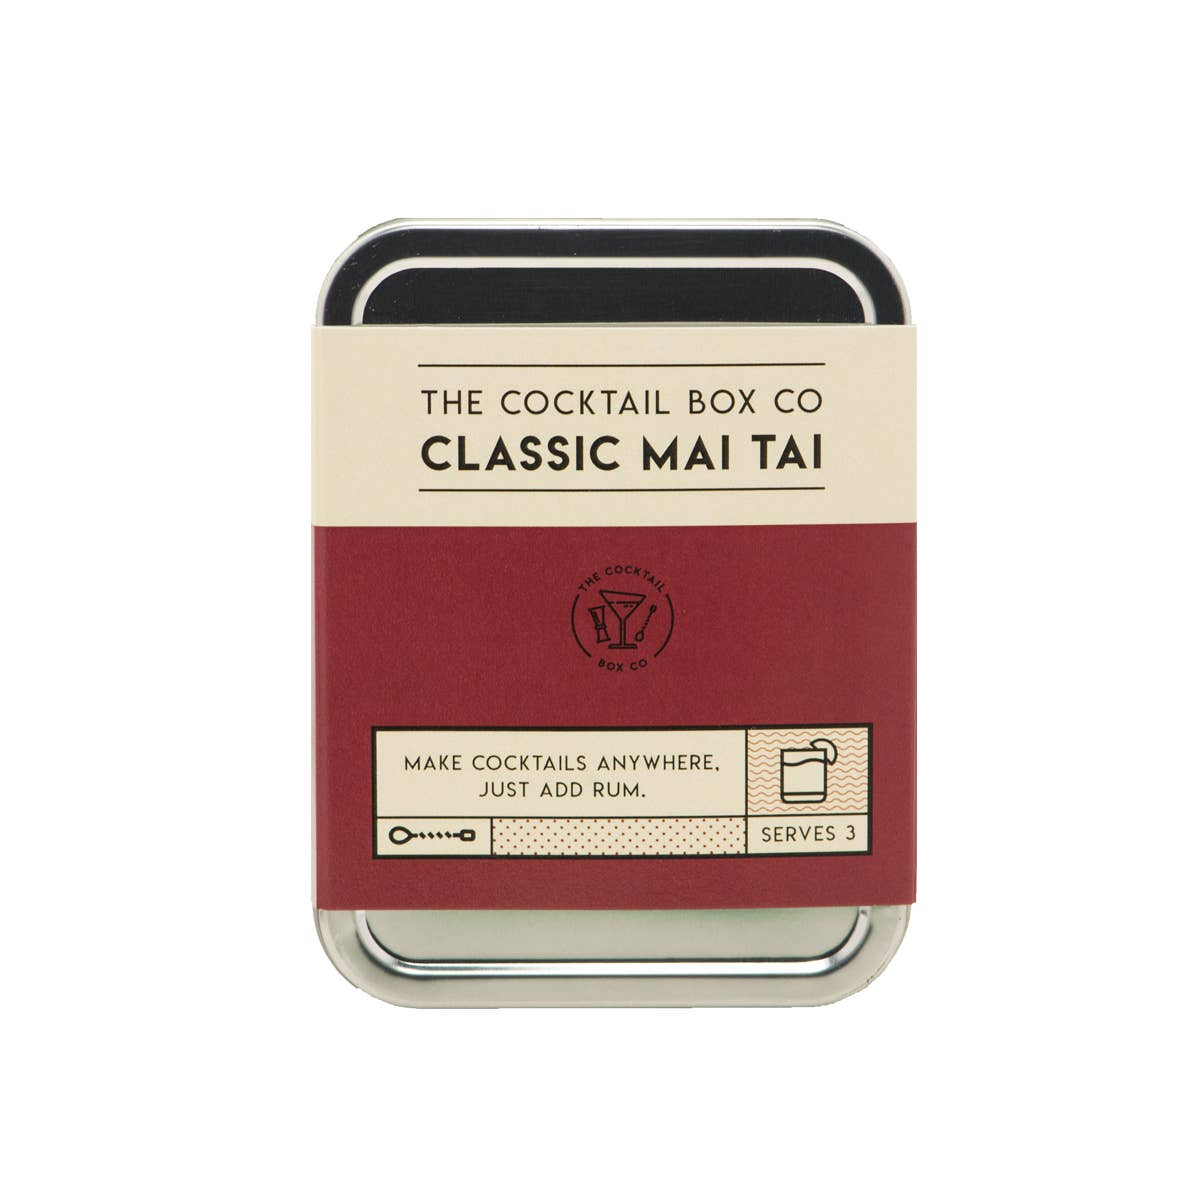 The Mai Tai Cocktail Kit - 1 Kit